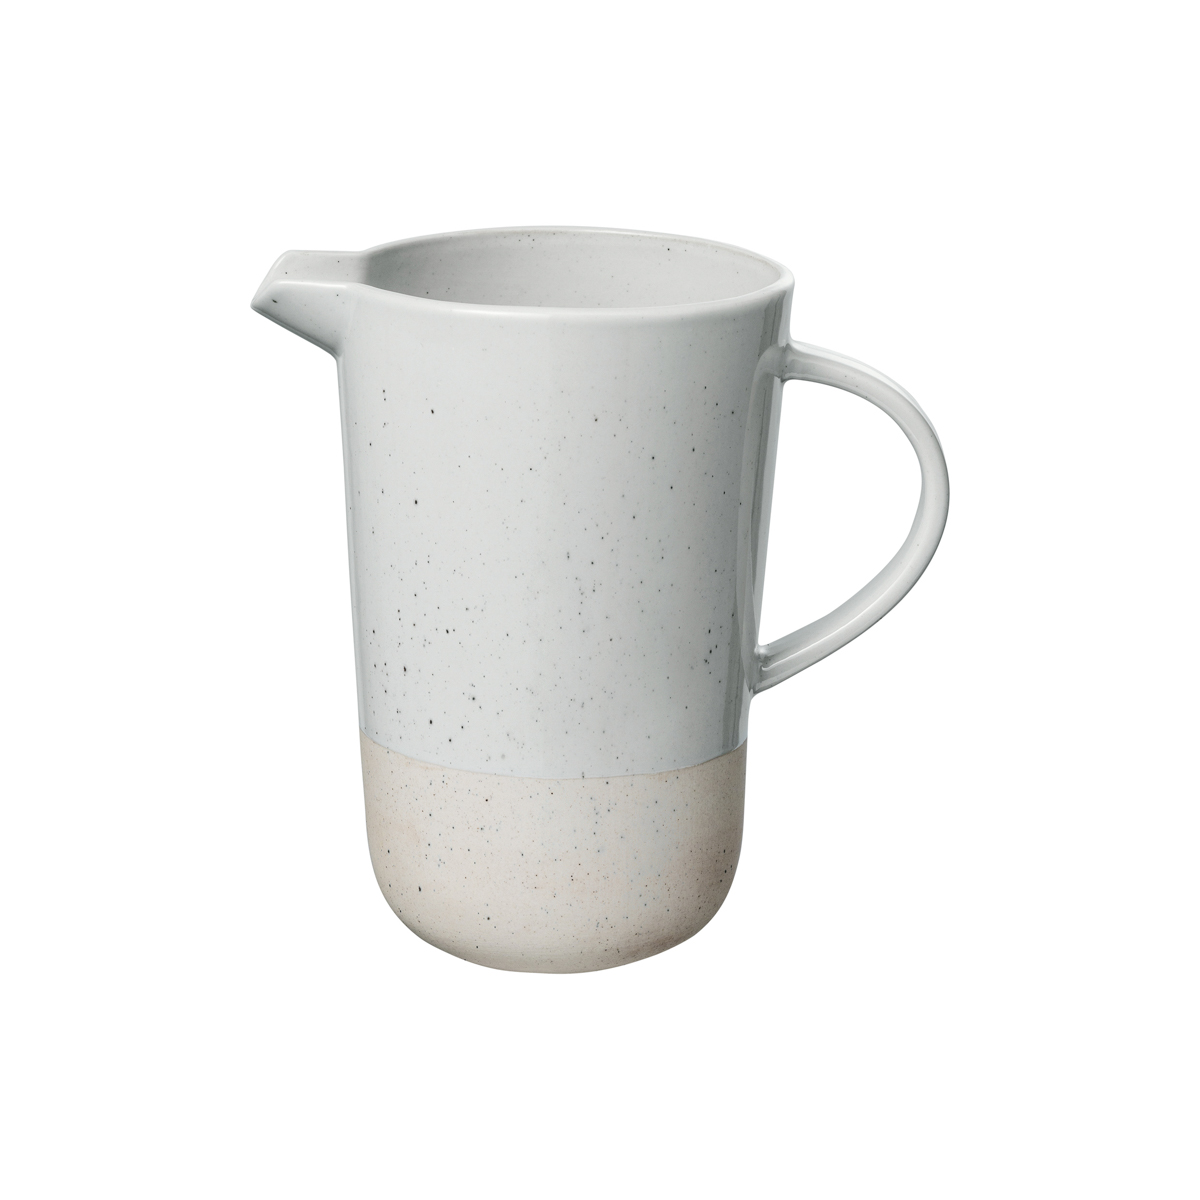 Krug -SABLO- Cloud 1 Liter, Ø 11 cm. Material: Keramik. Von Blomus.